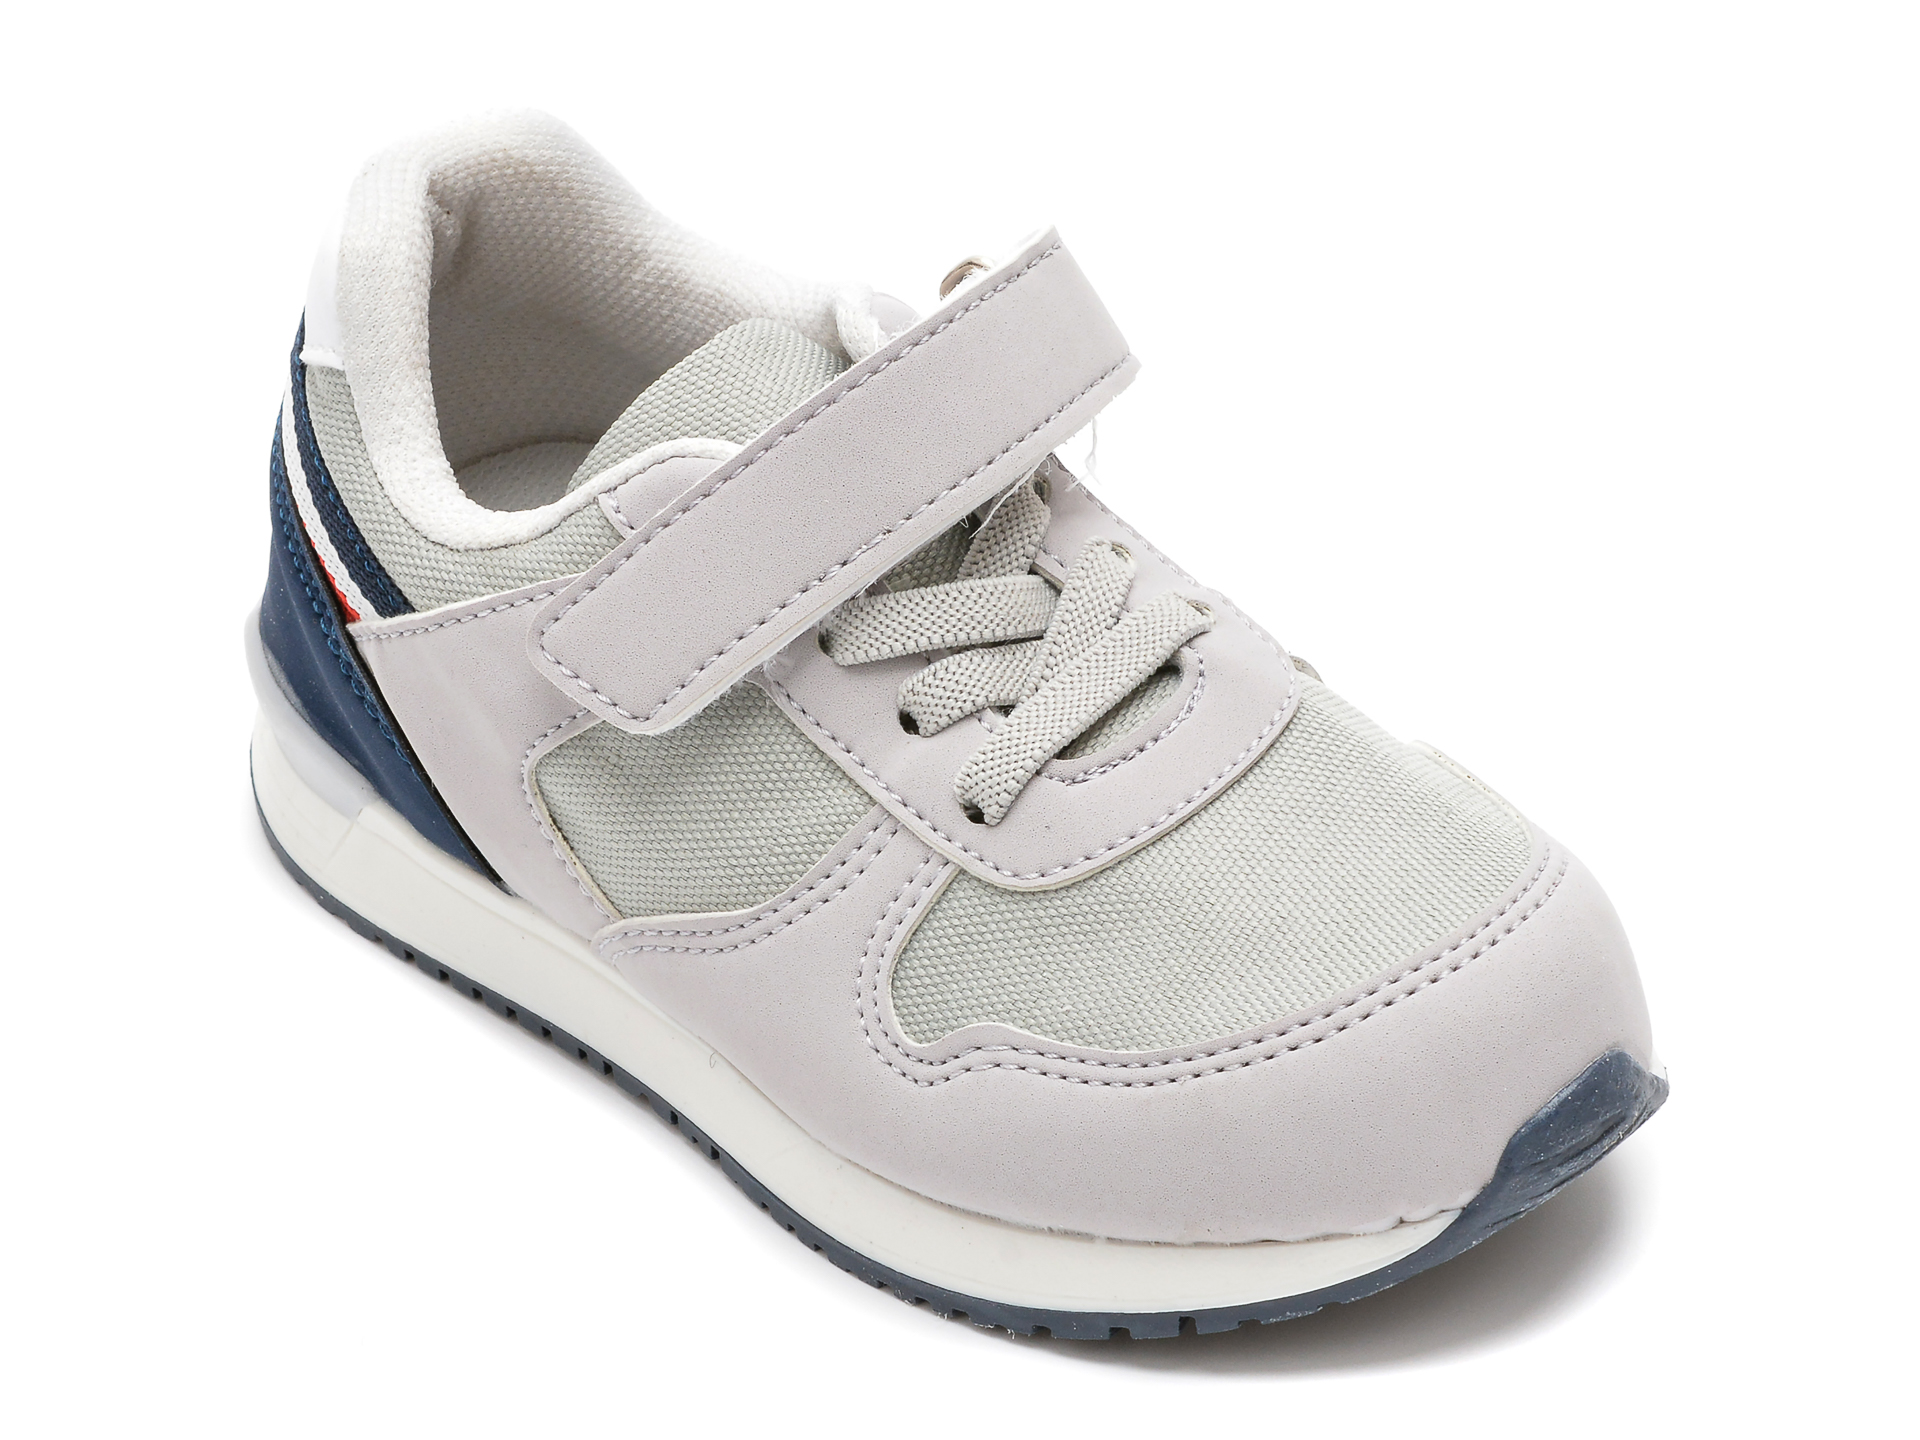 Pantofi sportPOLARIS gri, 520127, din material textil si piele ecologica /copii/incaltaminte